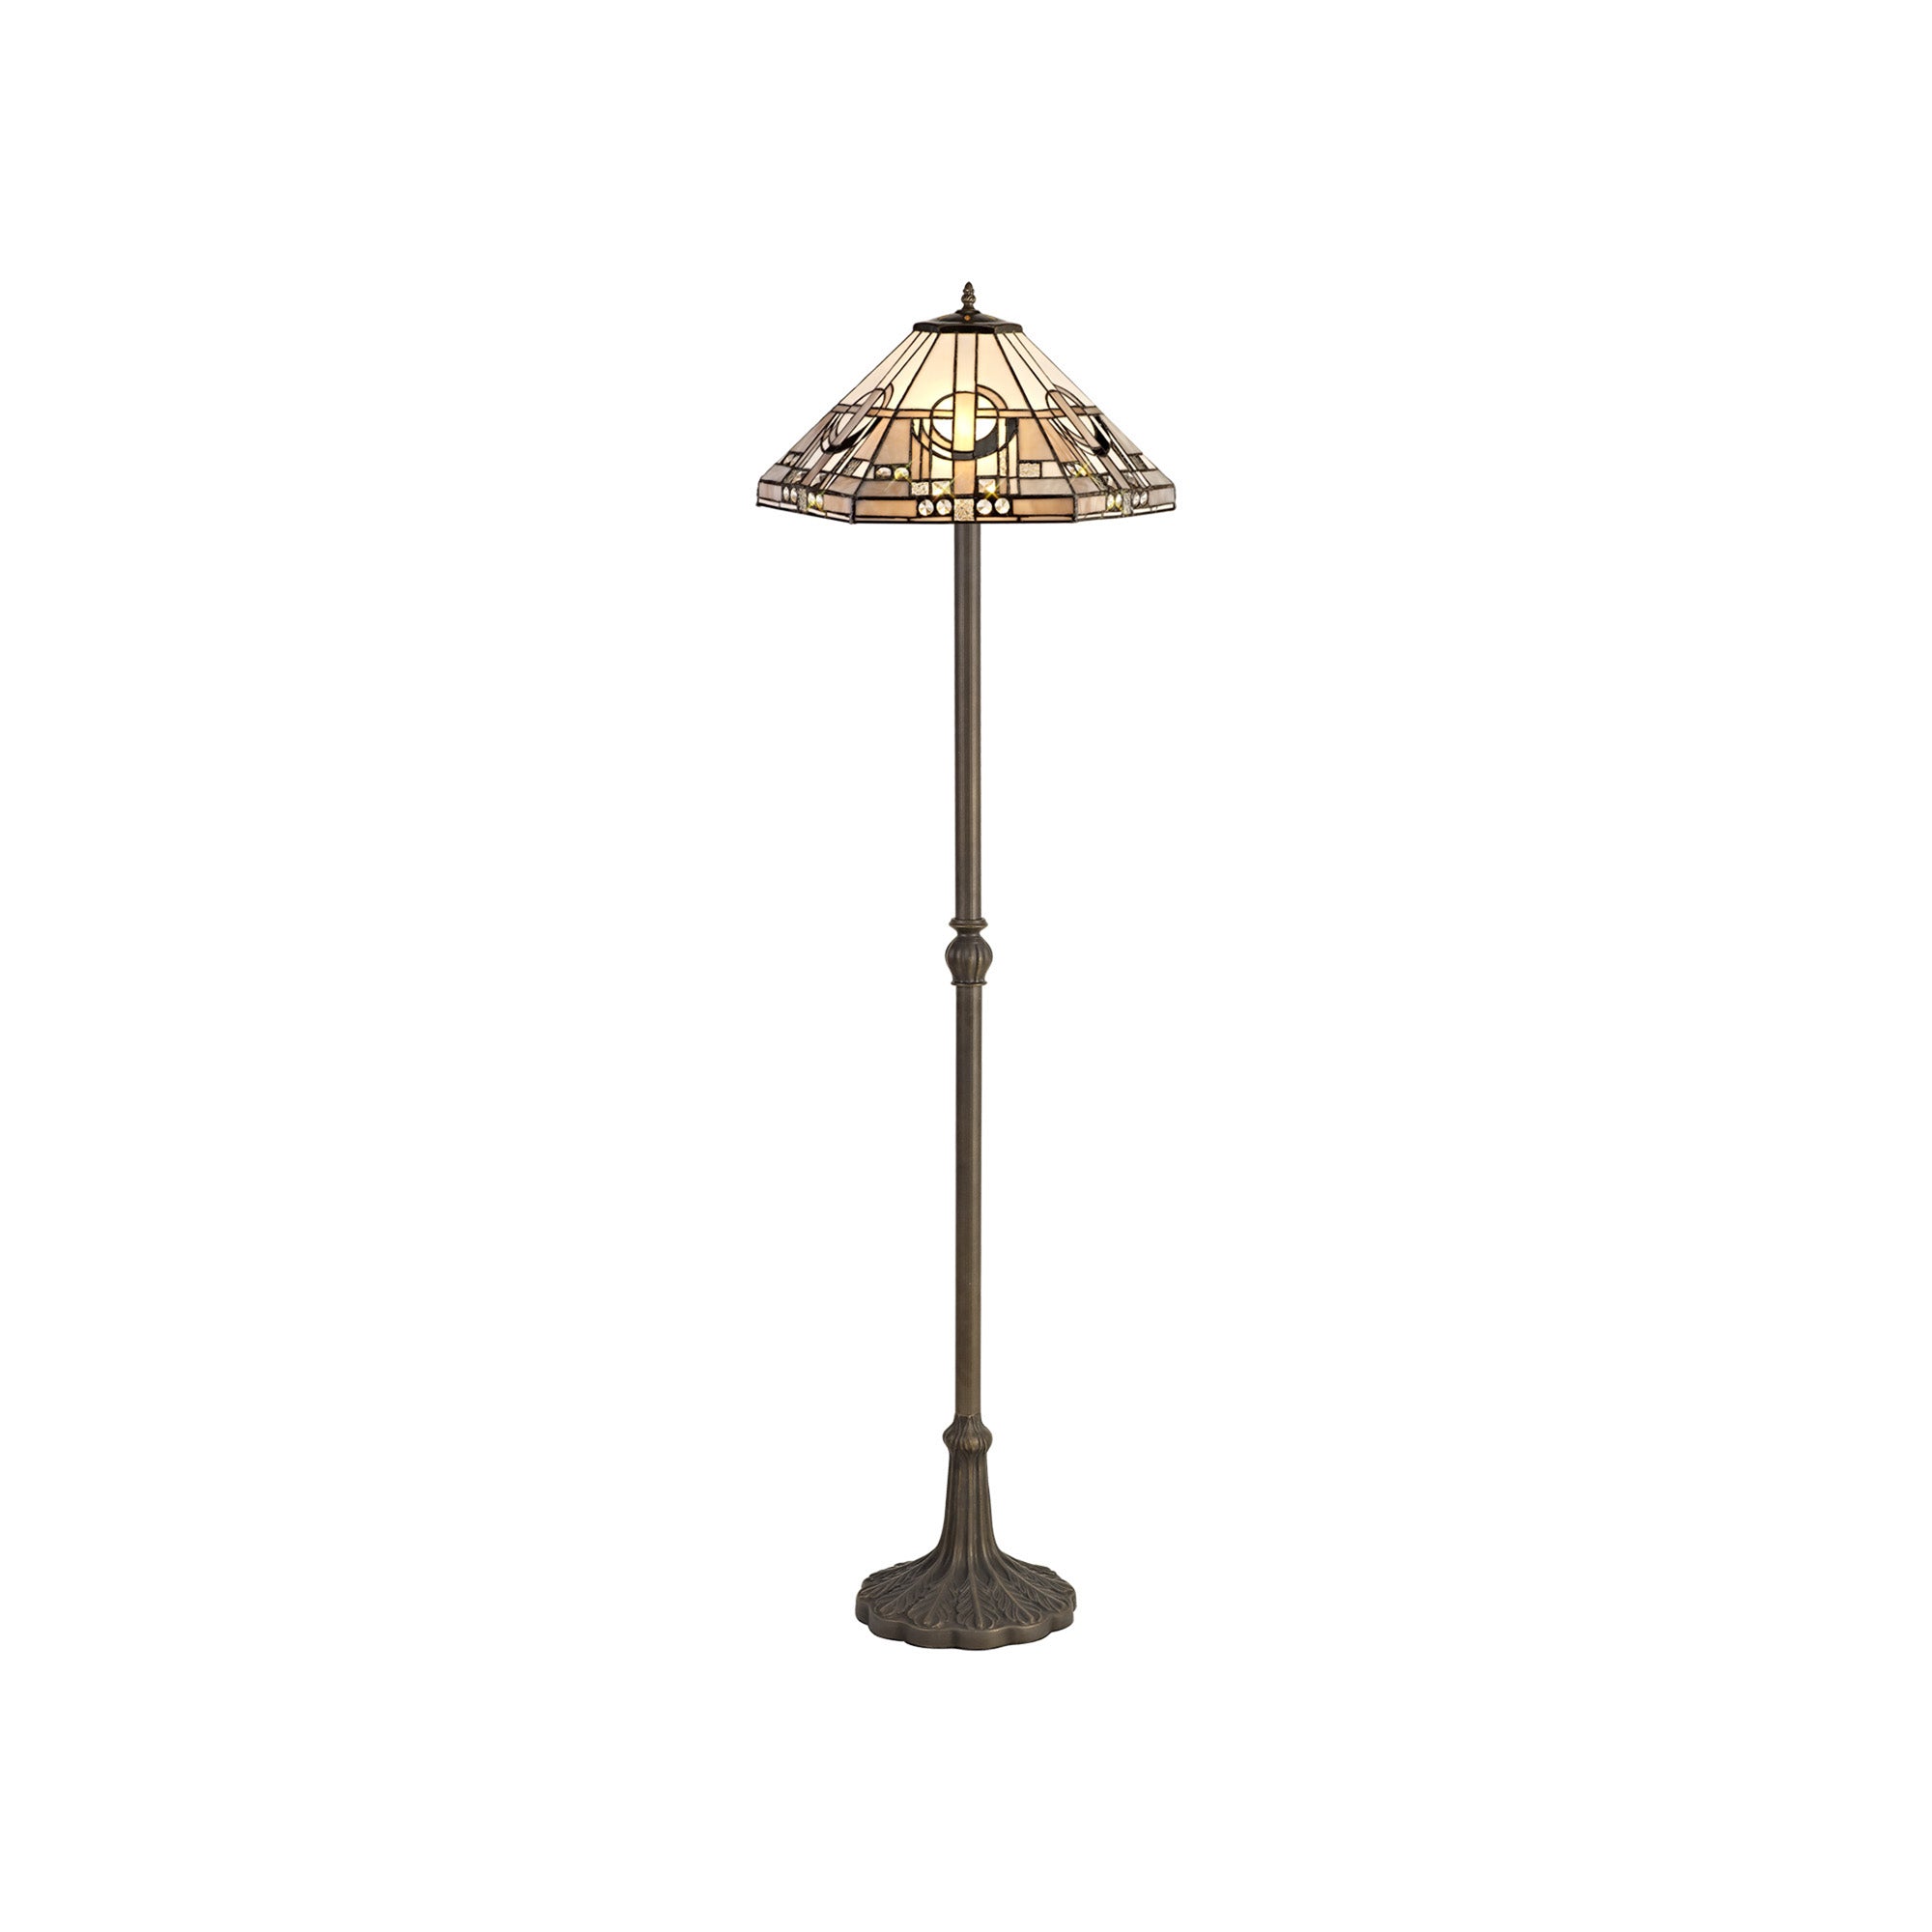 Atek 2 Light Leaf Design Floor Lamp E27 With 40cm Tiffany Shade, White/Grey/Black/Clear Crystal/Aged Antique Brass